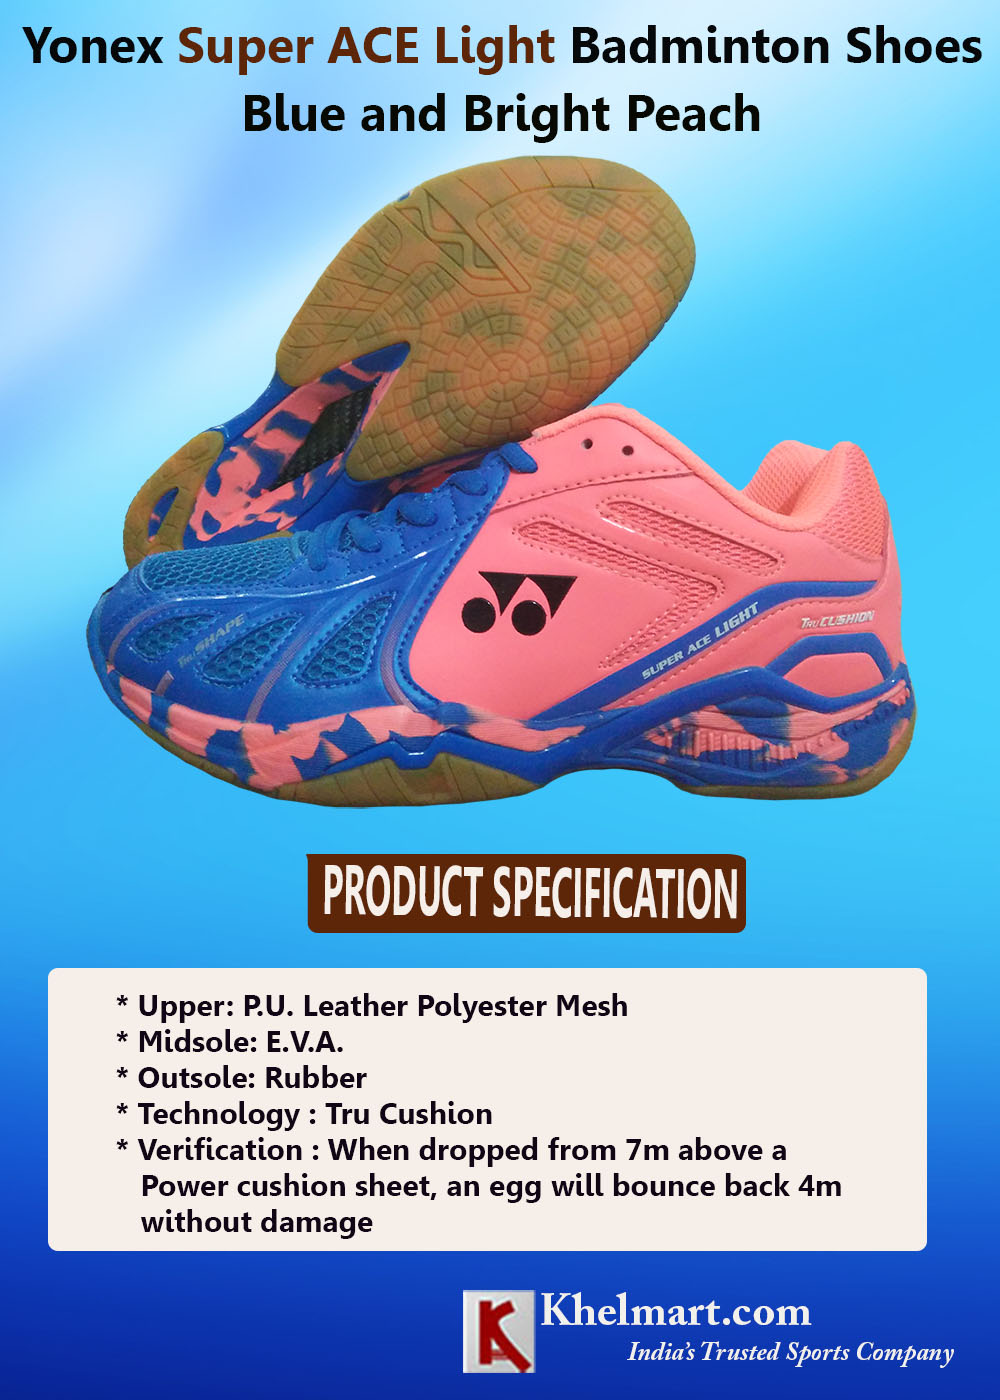 Yonex-Super-ACE-Light-Badminton-Shoes-Blue-and-Bright-Peach.jpg